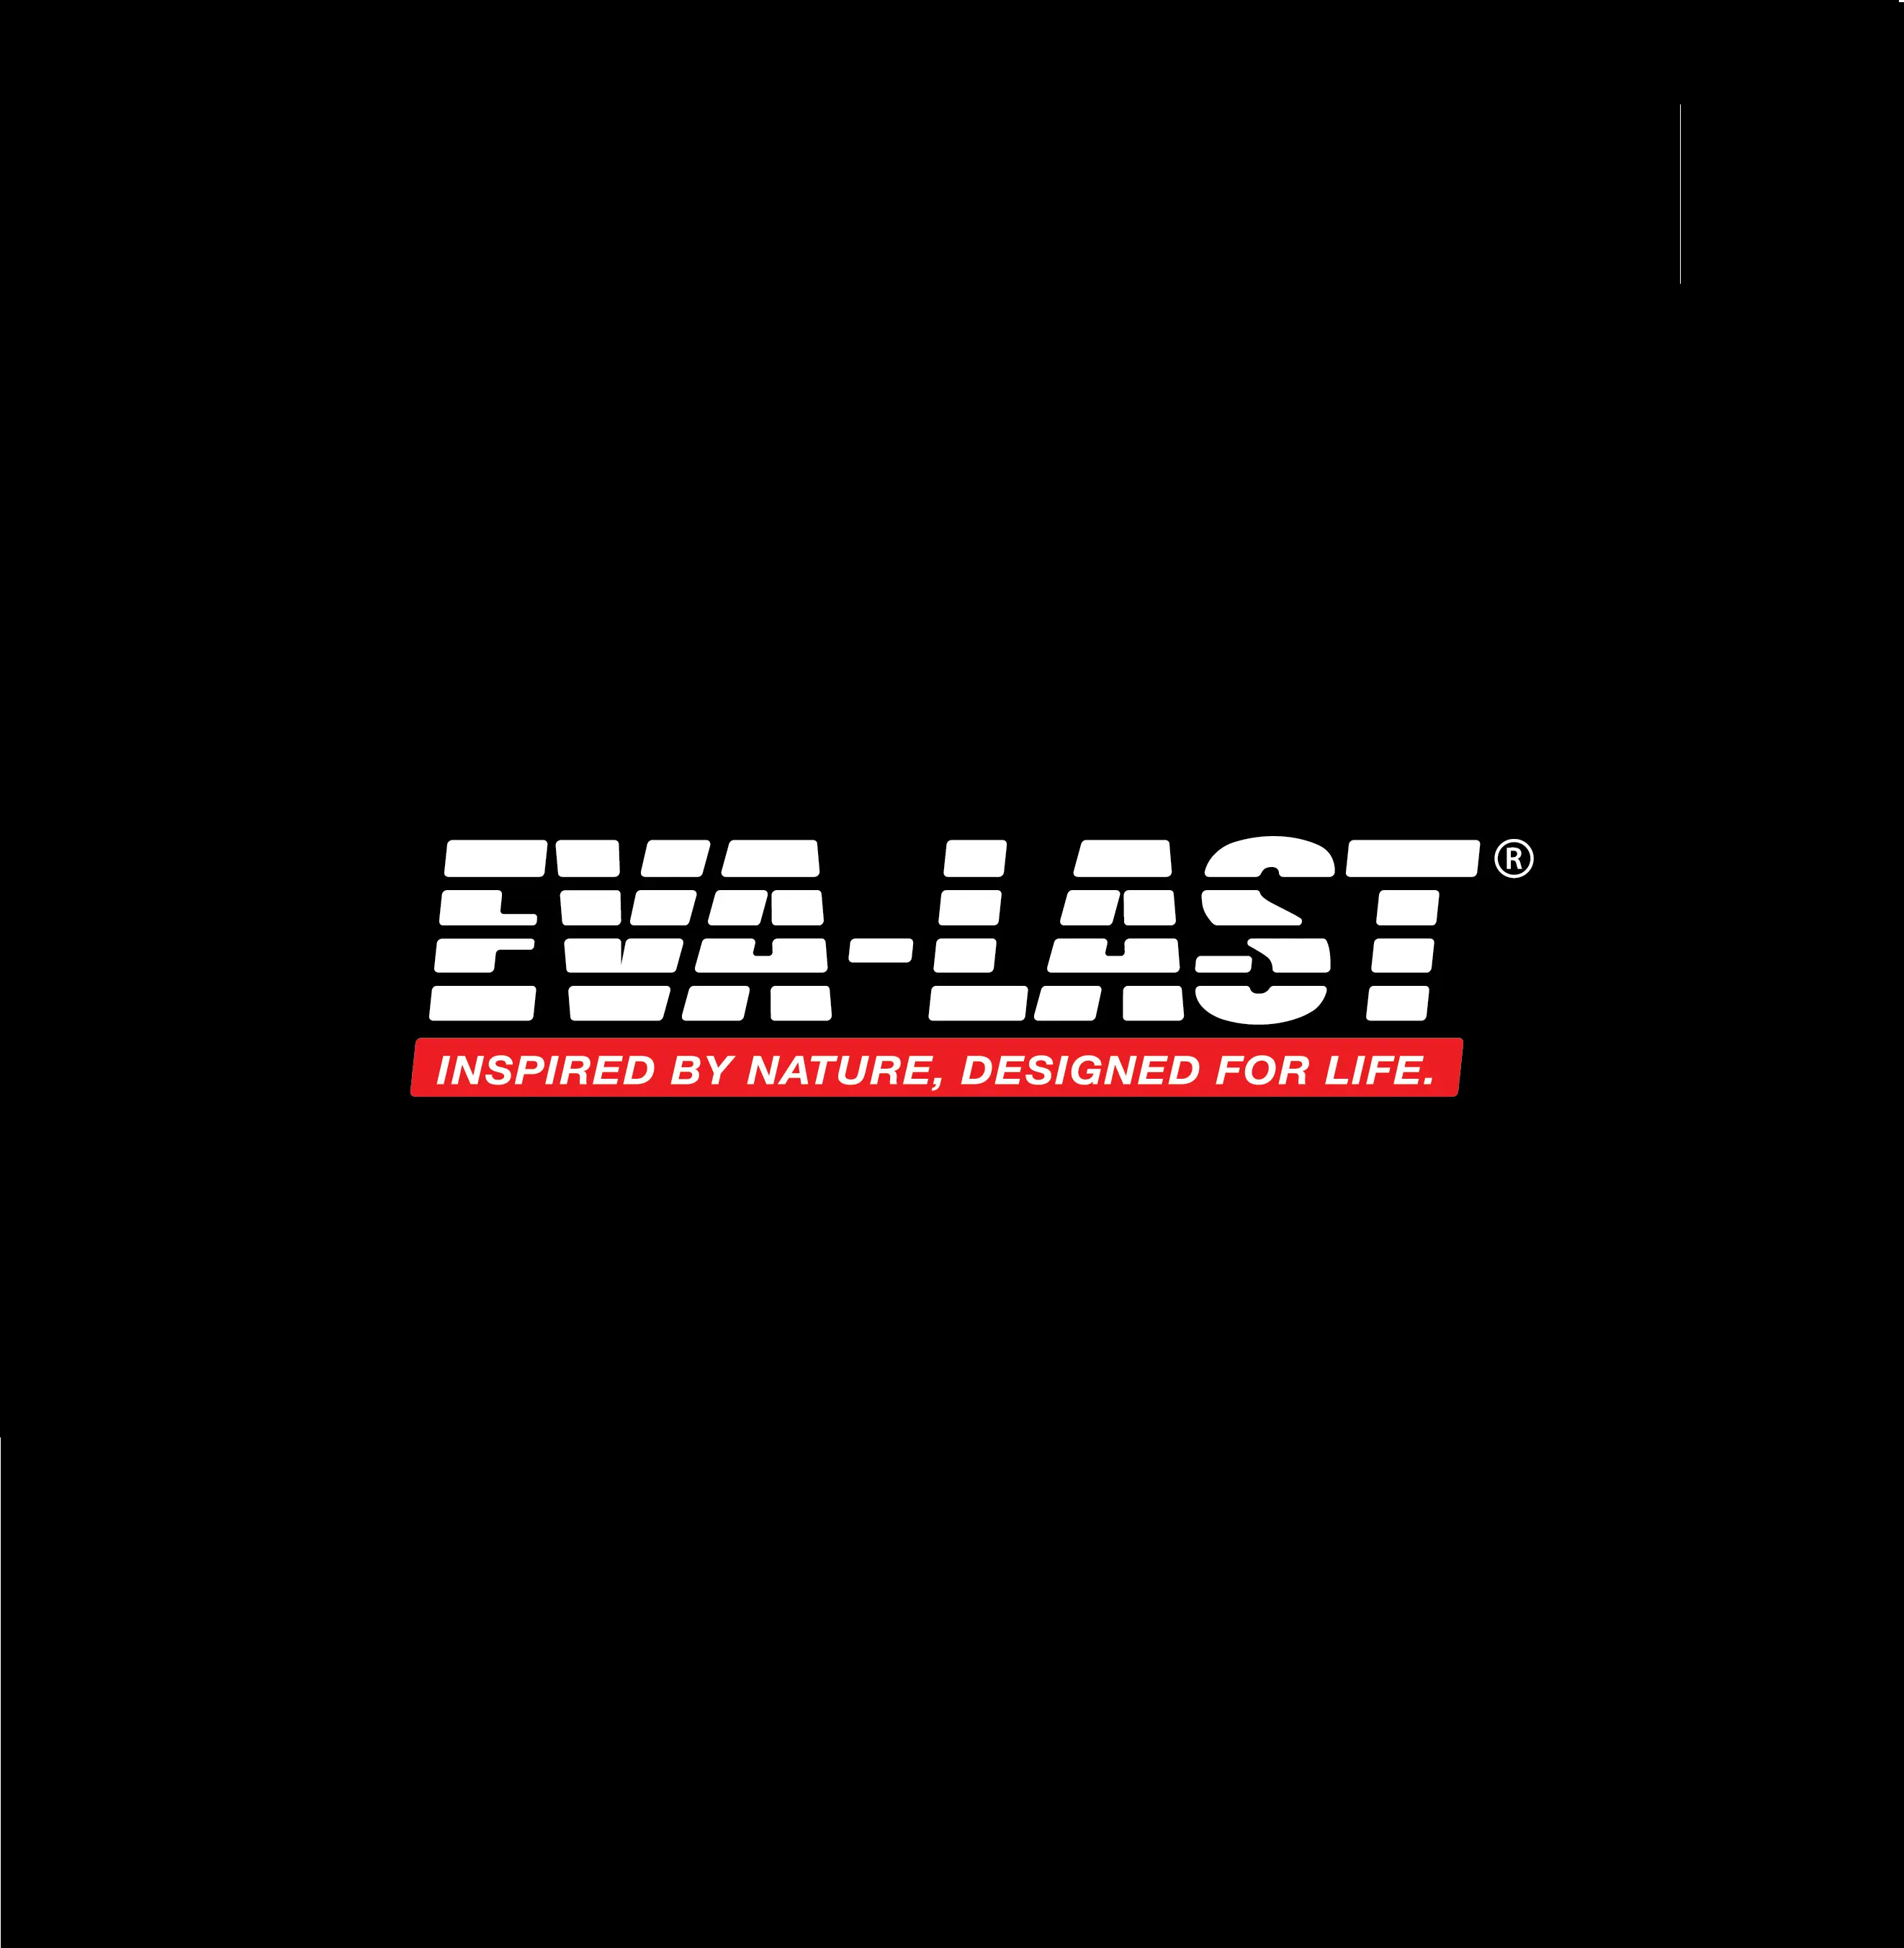 Eva-Last's' logo